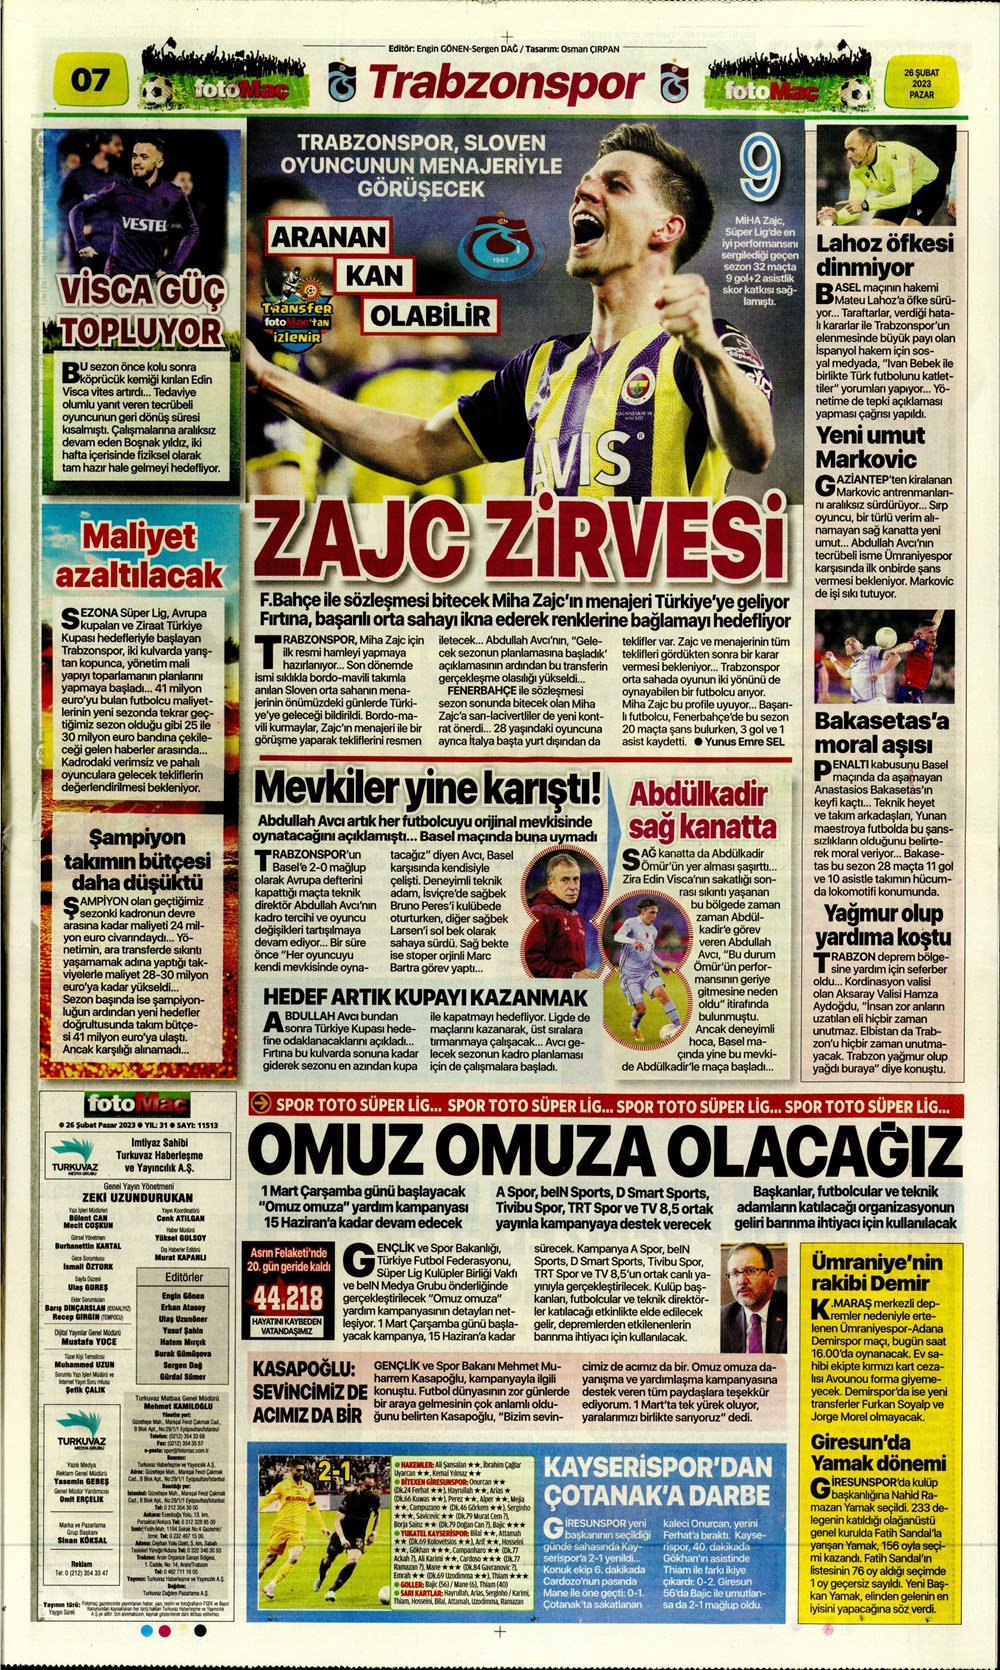 "Valenci'ağa' böyle istedi" - Sporun manşetleri  - 14. Foto